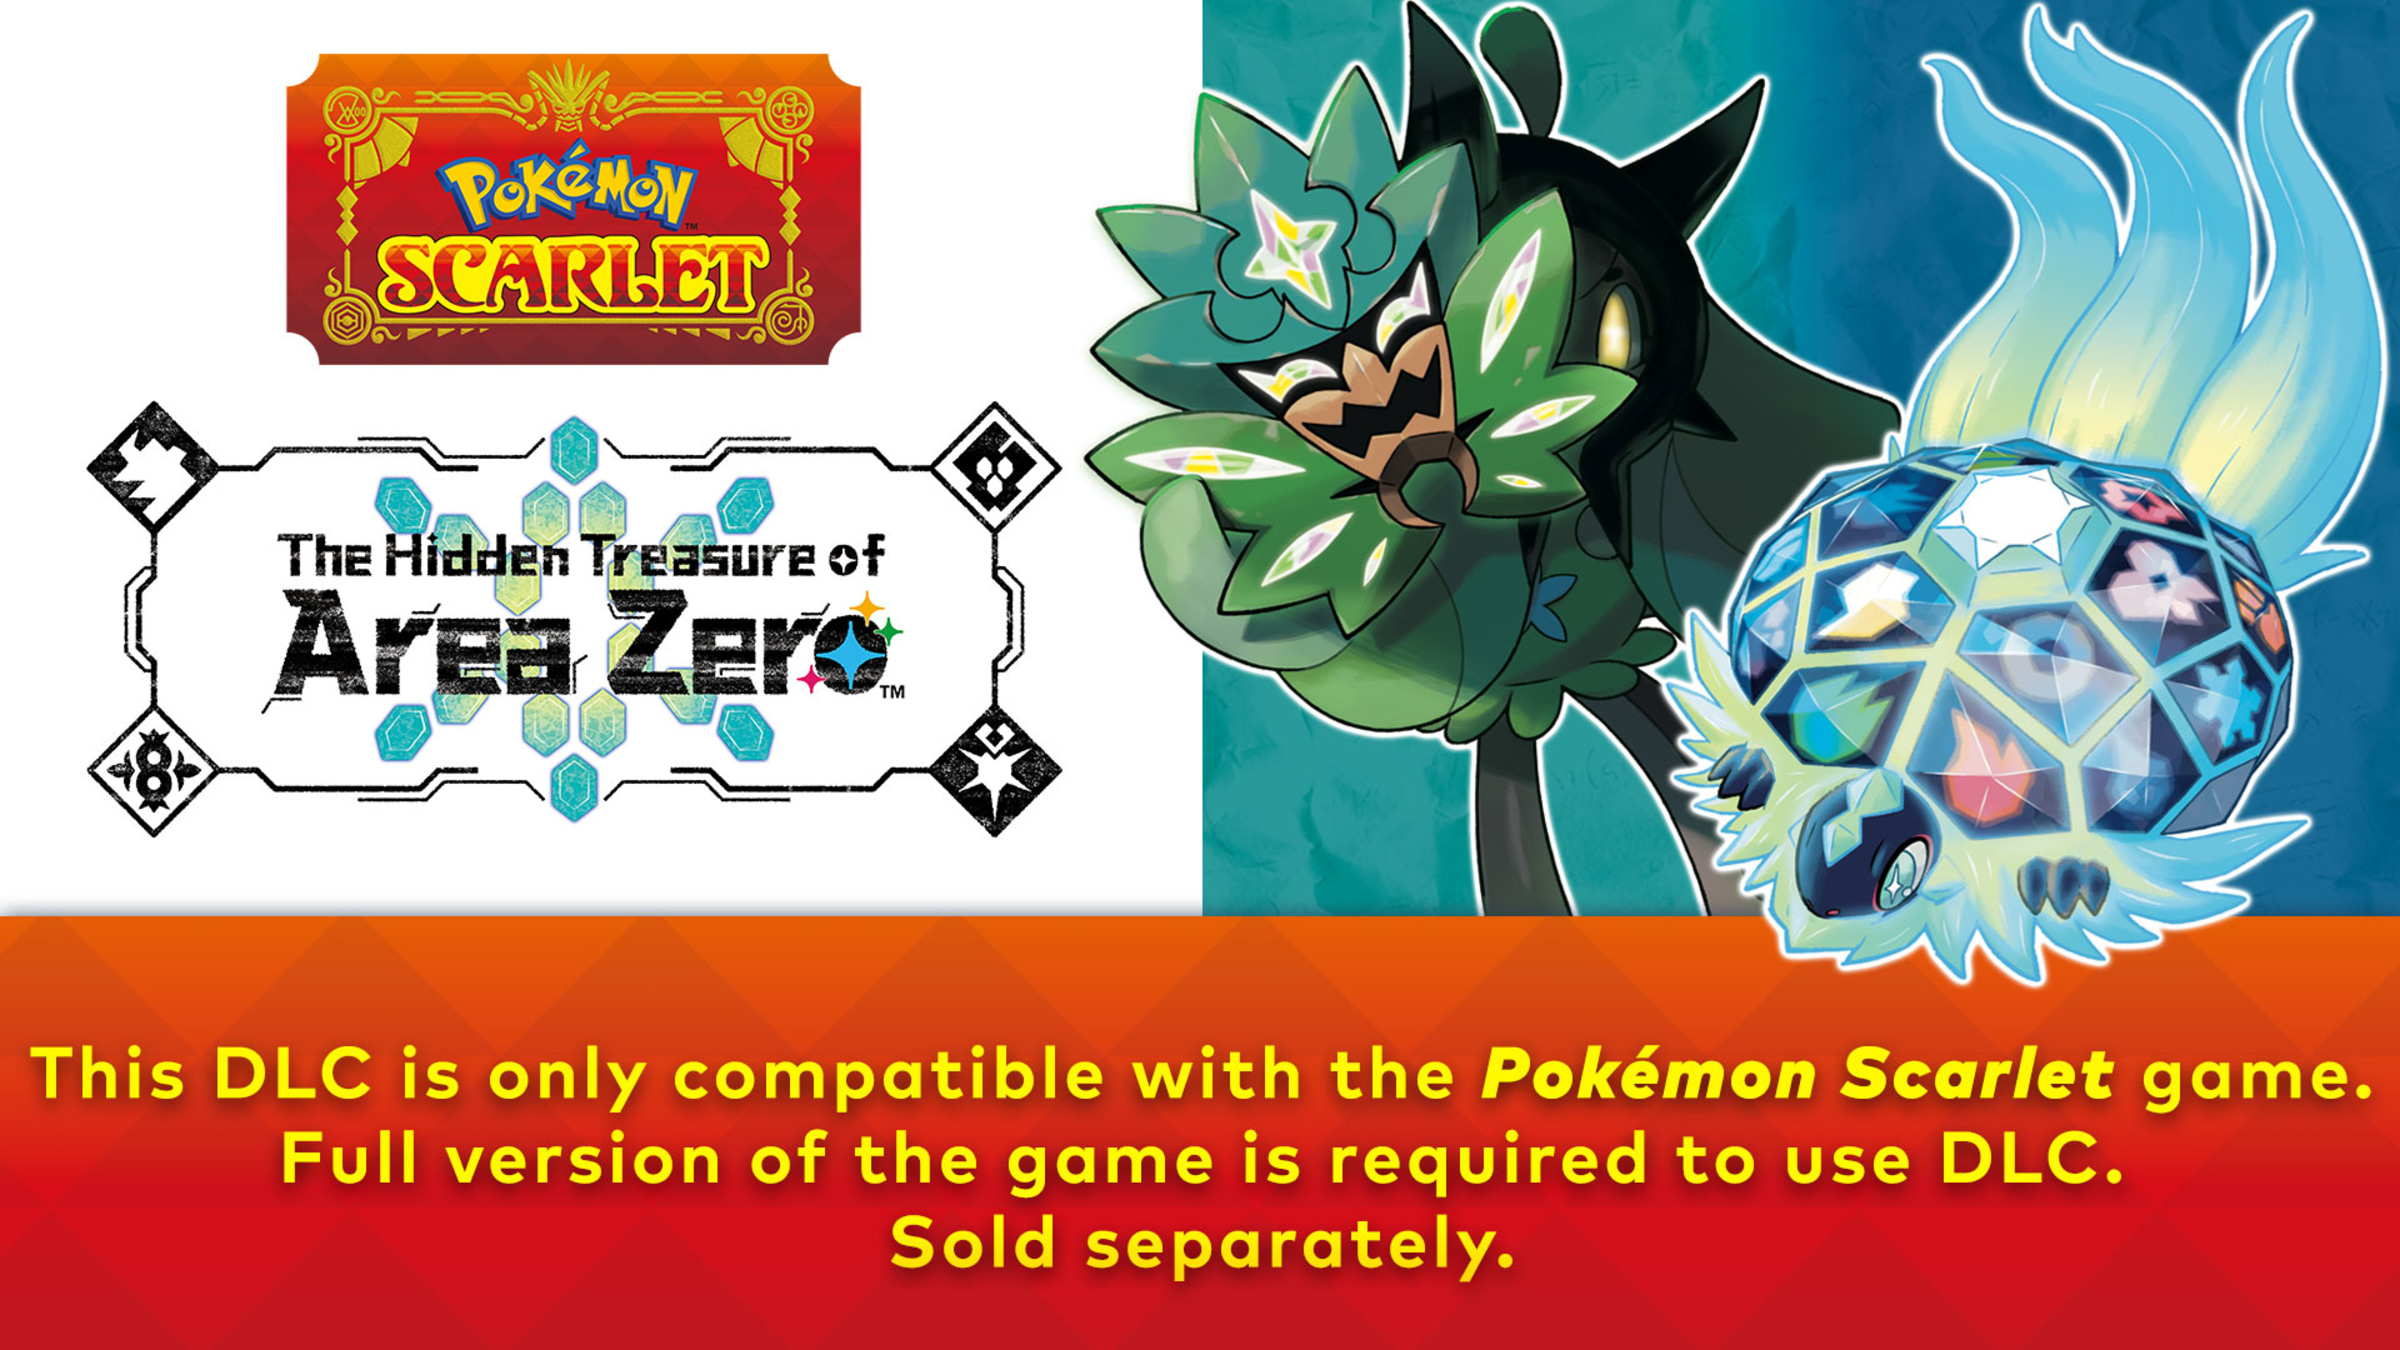 Pokémon™ Scarlet: The Hidden Treasure of Area Zero for Nintendo